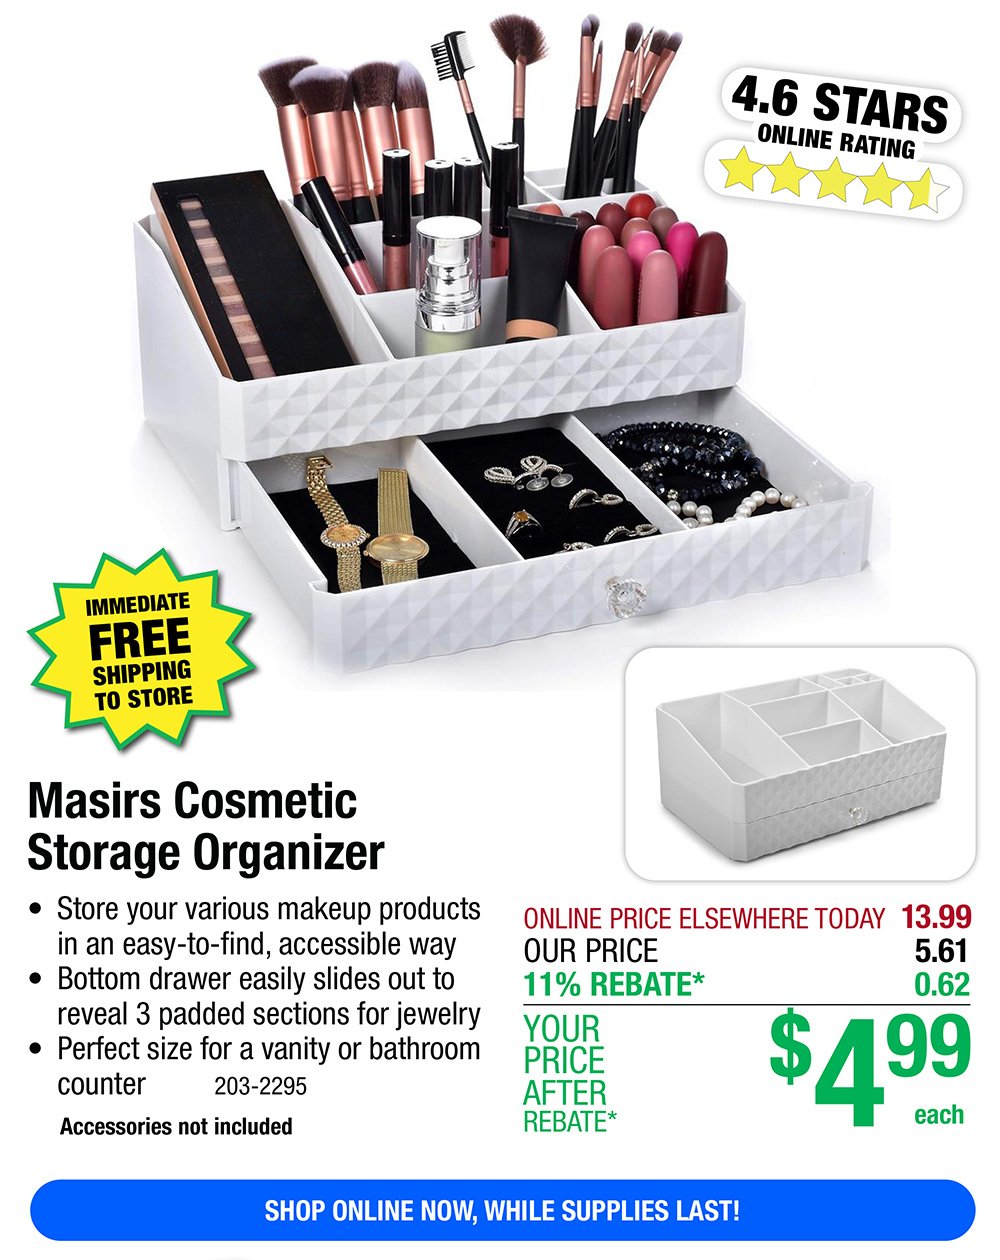 Masirs Cosmetic Storage Organizer